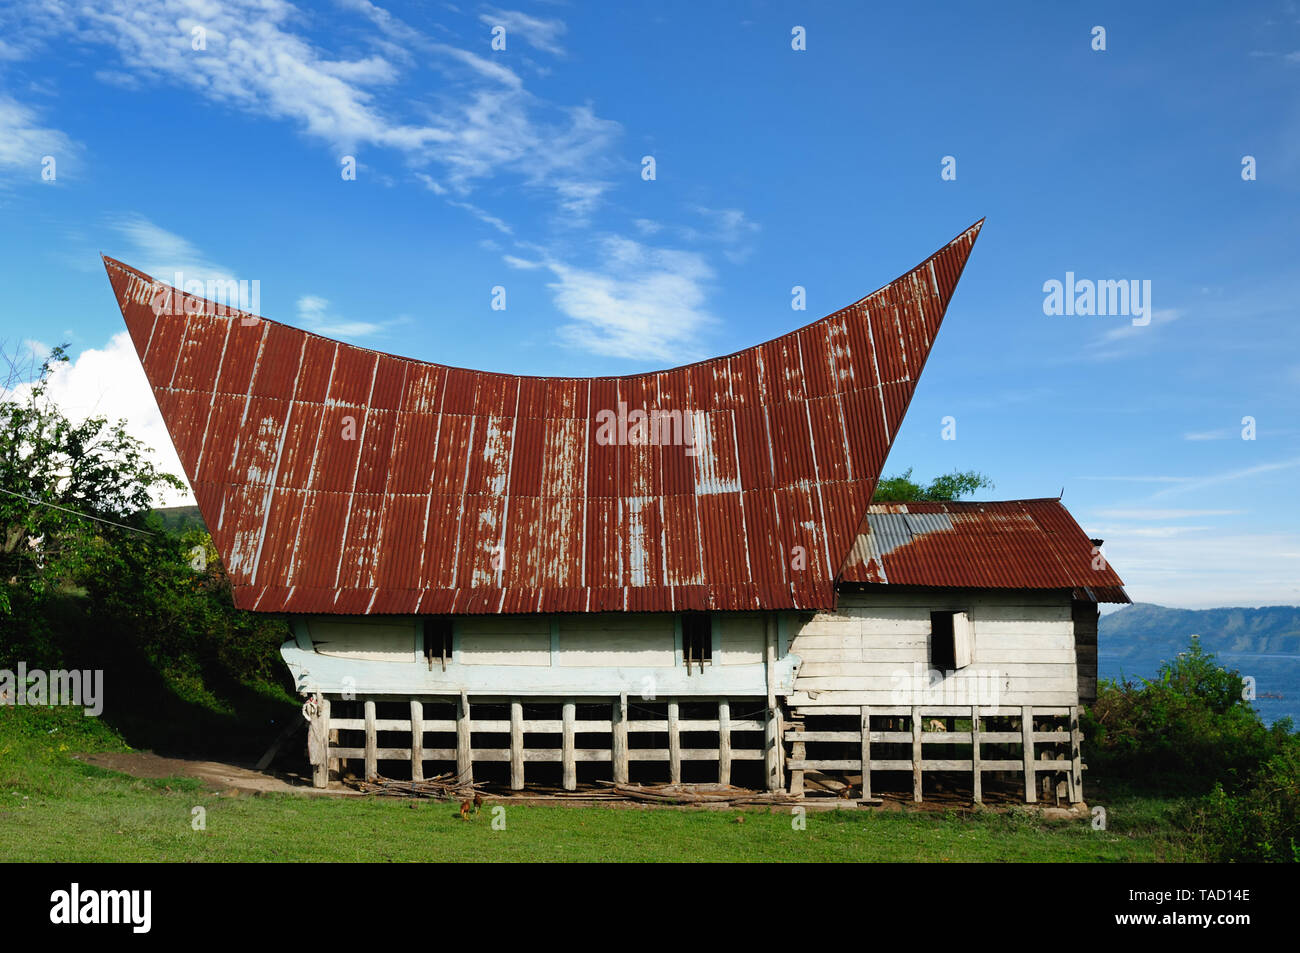 Traditional Batak style house at the Samosir island, Danau Toba, Indonesia, North Sumatra Stock Photo